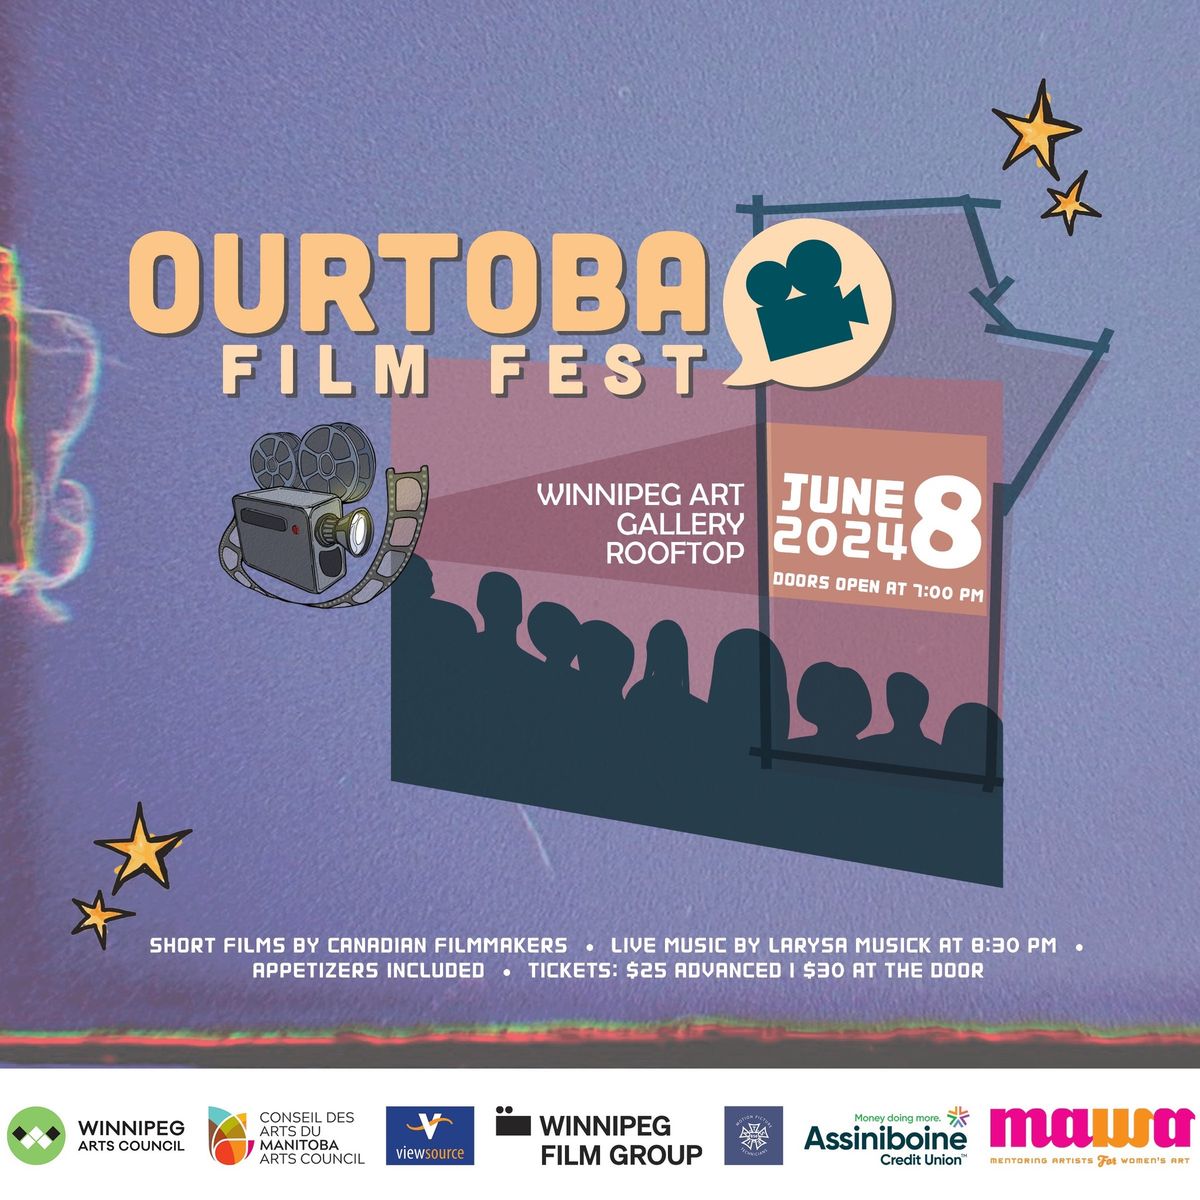 OurToba Film Fest